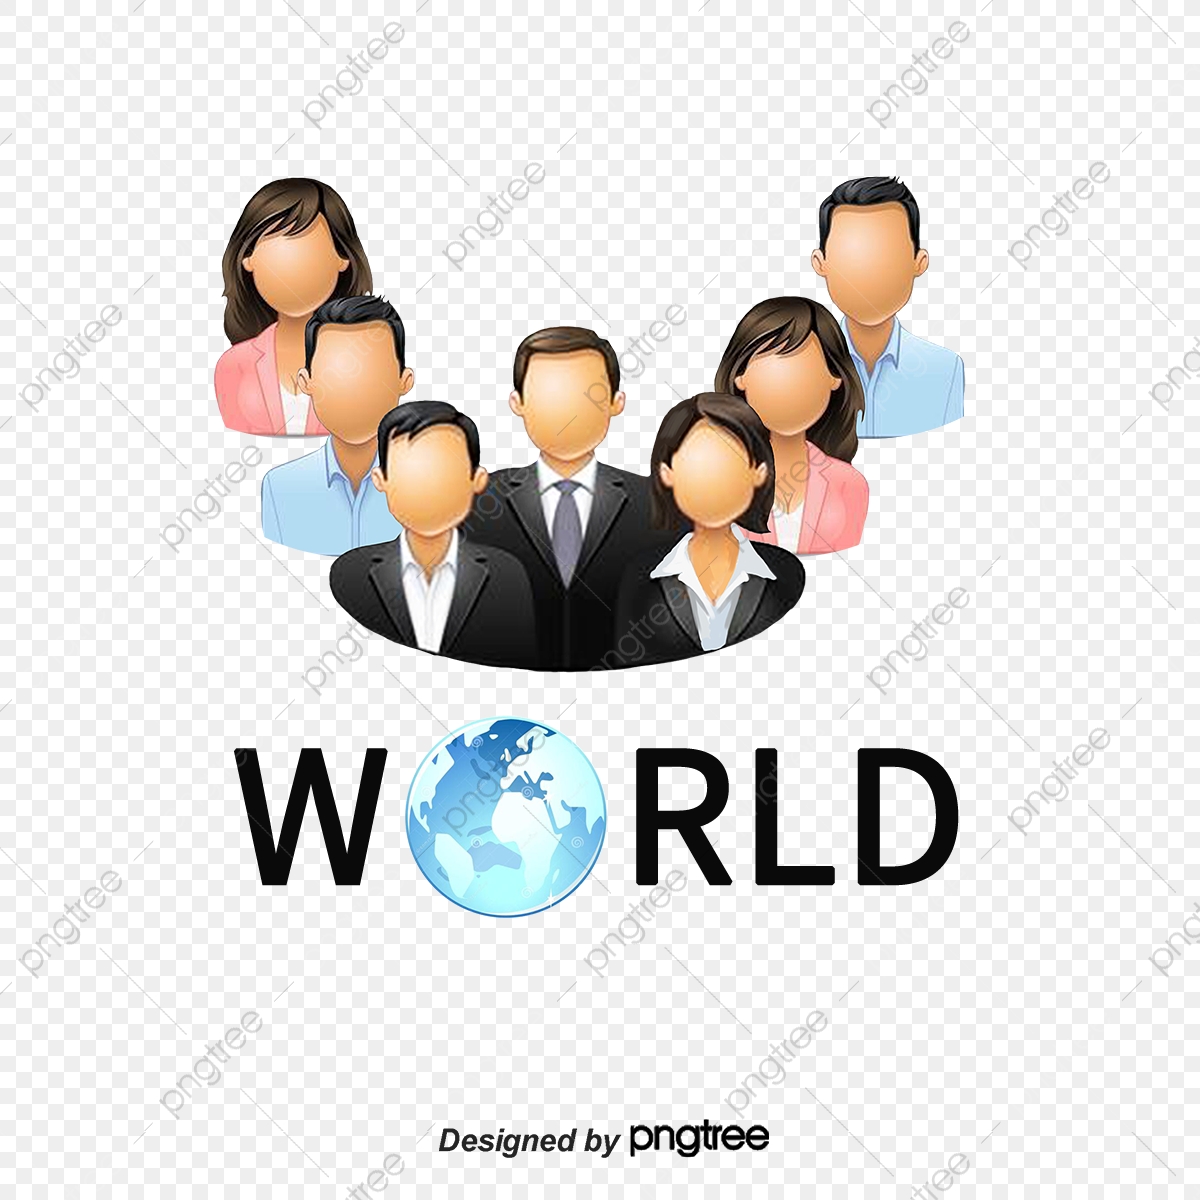 World Population Day Png - Va